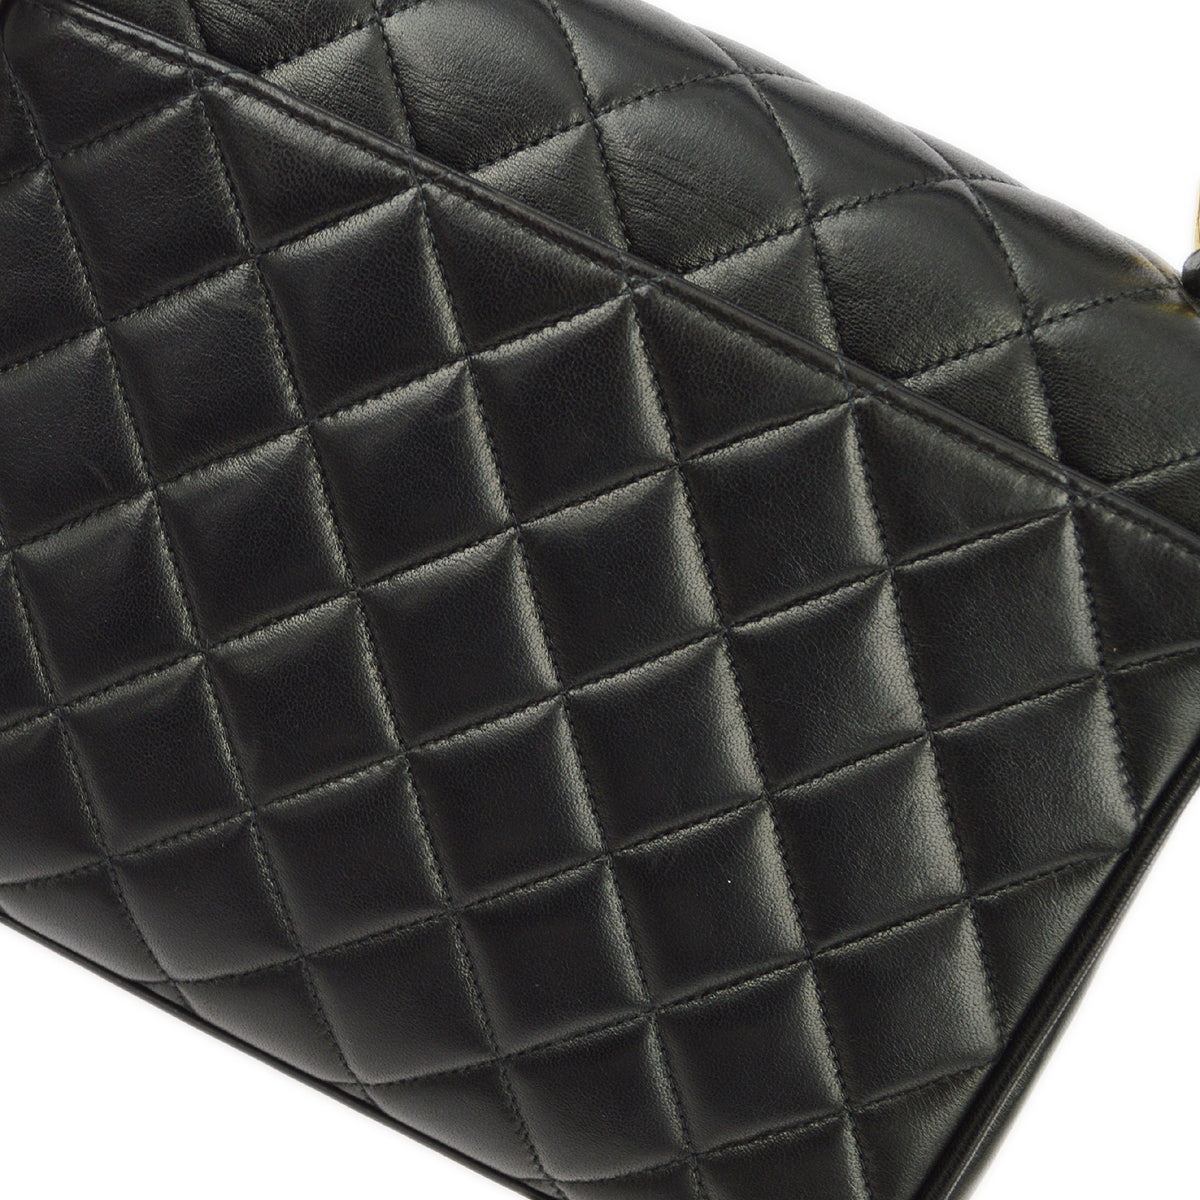 Chanel Black Lambskin Straight Flap Handbag